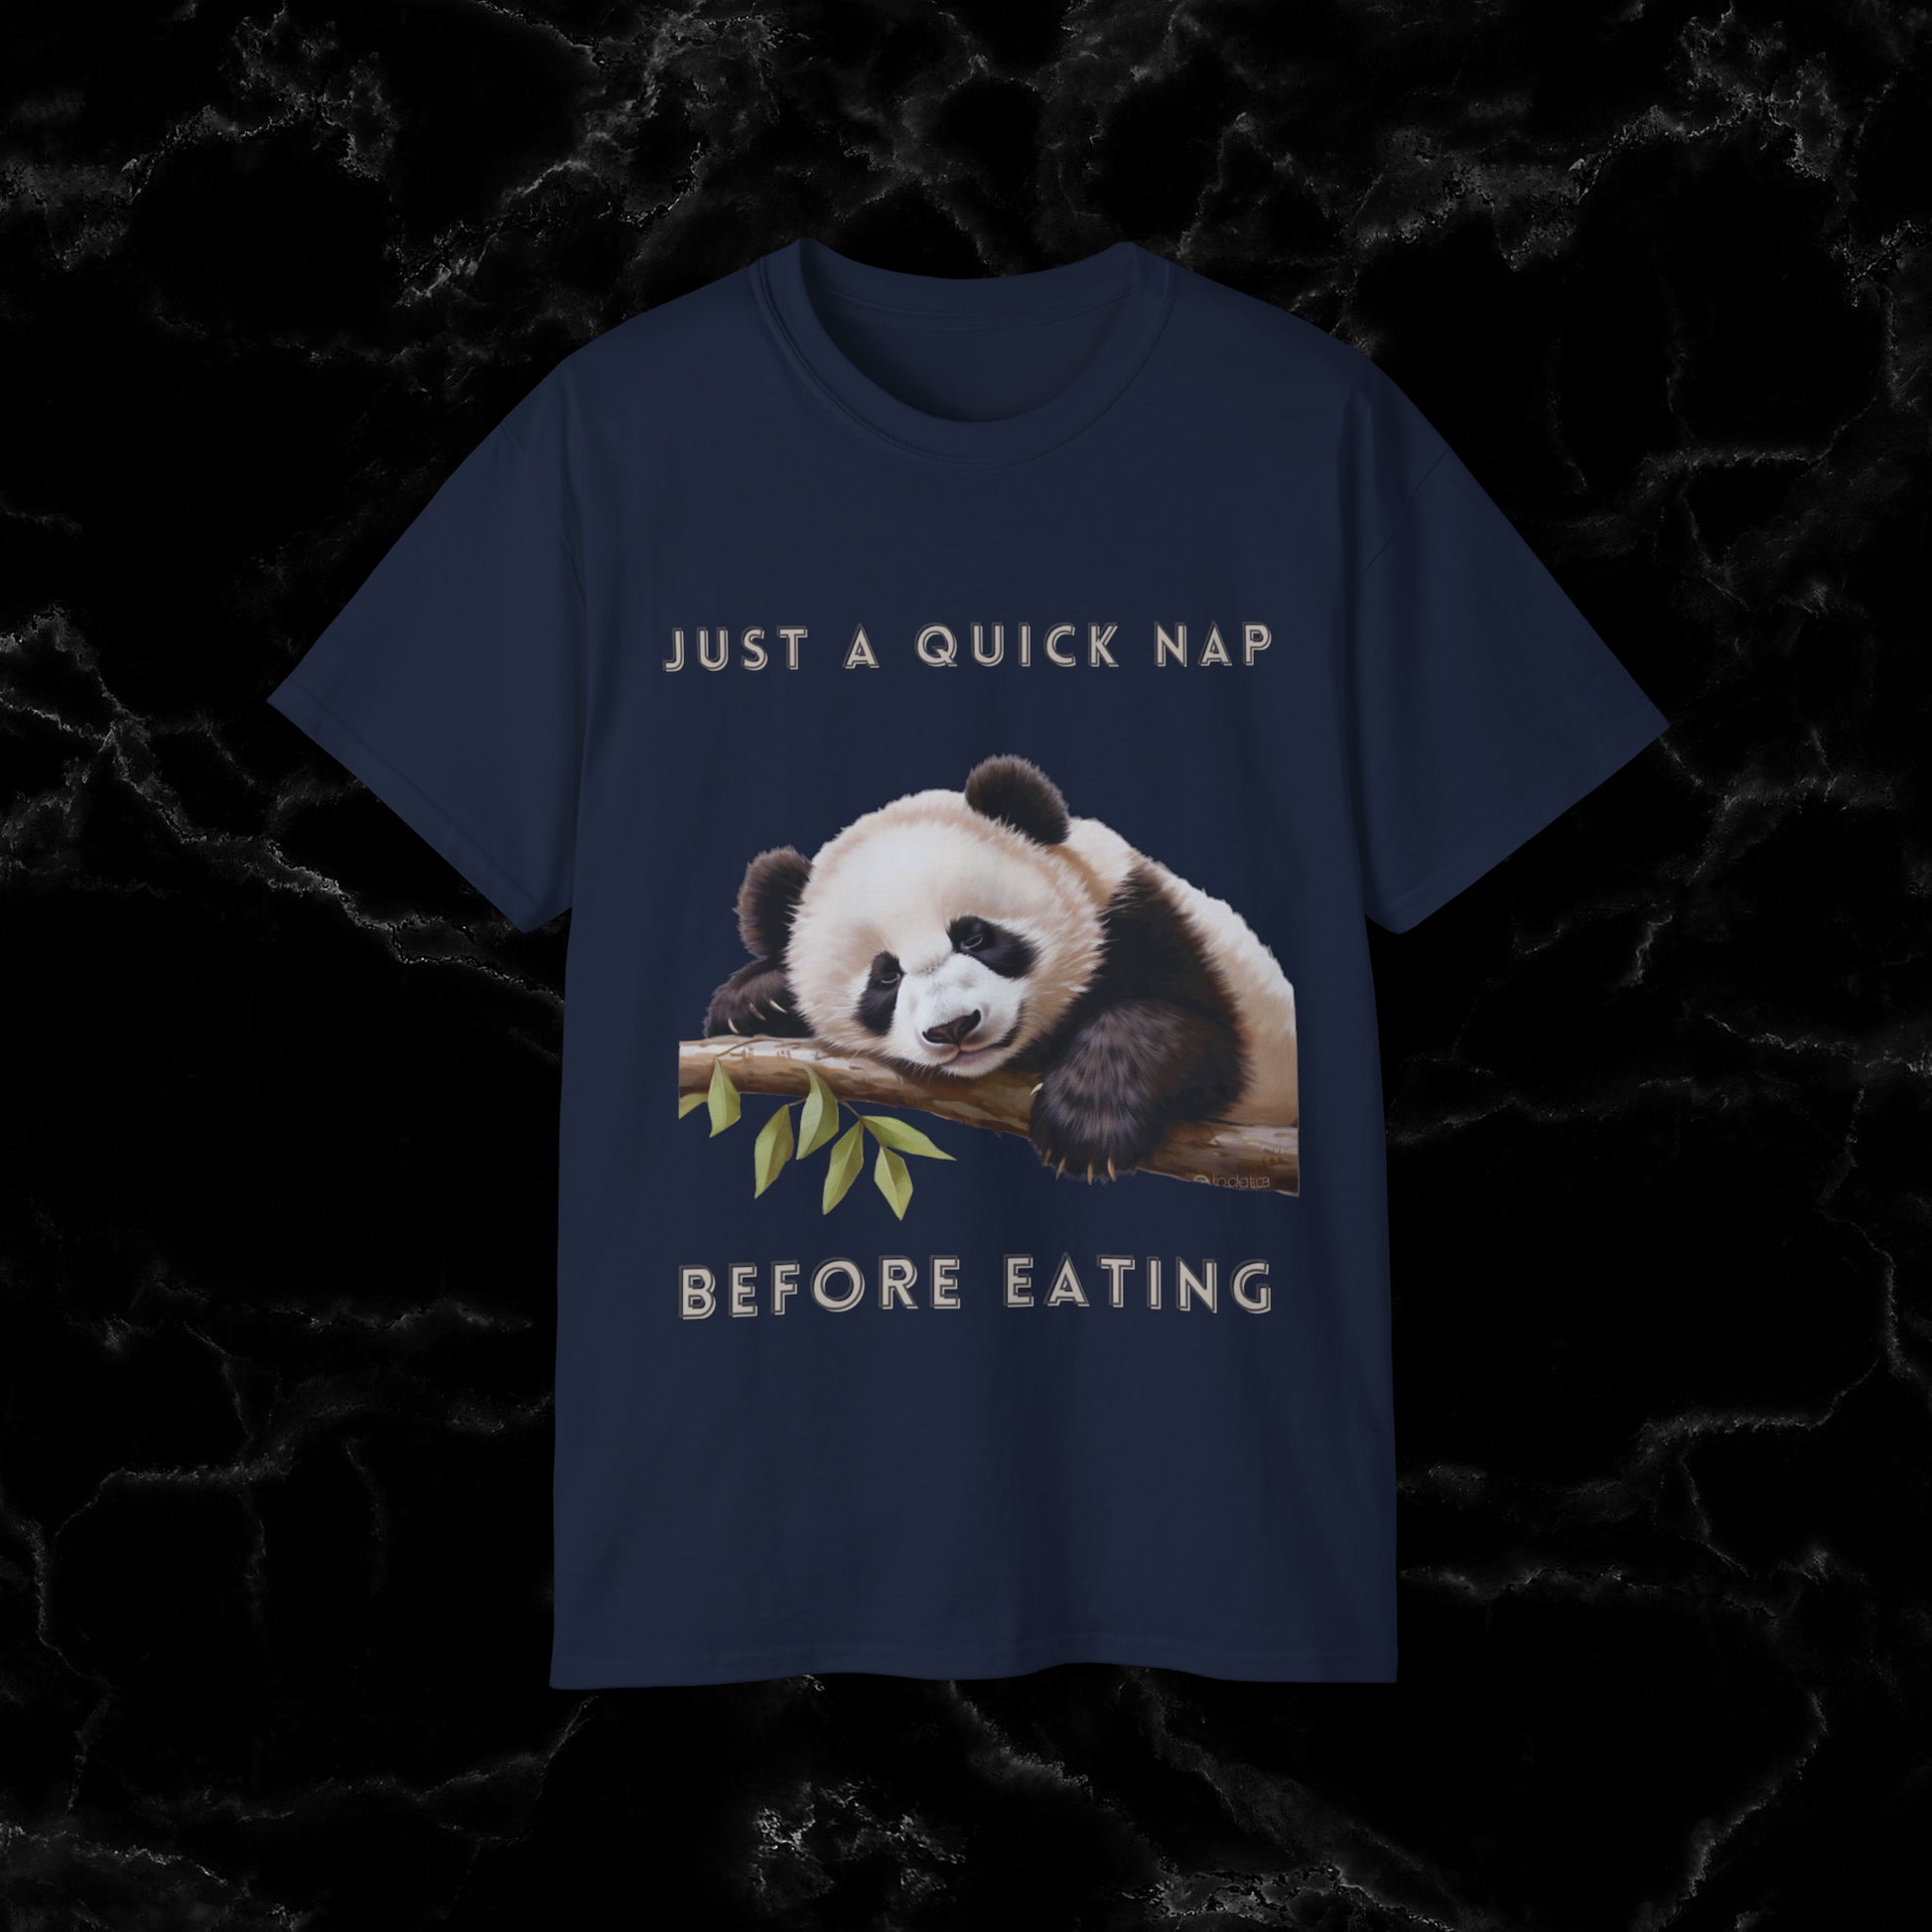 Nap Time Panda Unisex Funny Tee - Hilarious Panda Nap Design - Just a Quick Nap Before Eating T-Shirt Navy S 